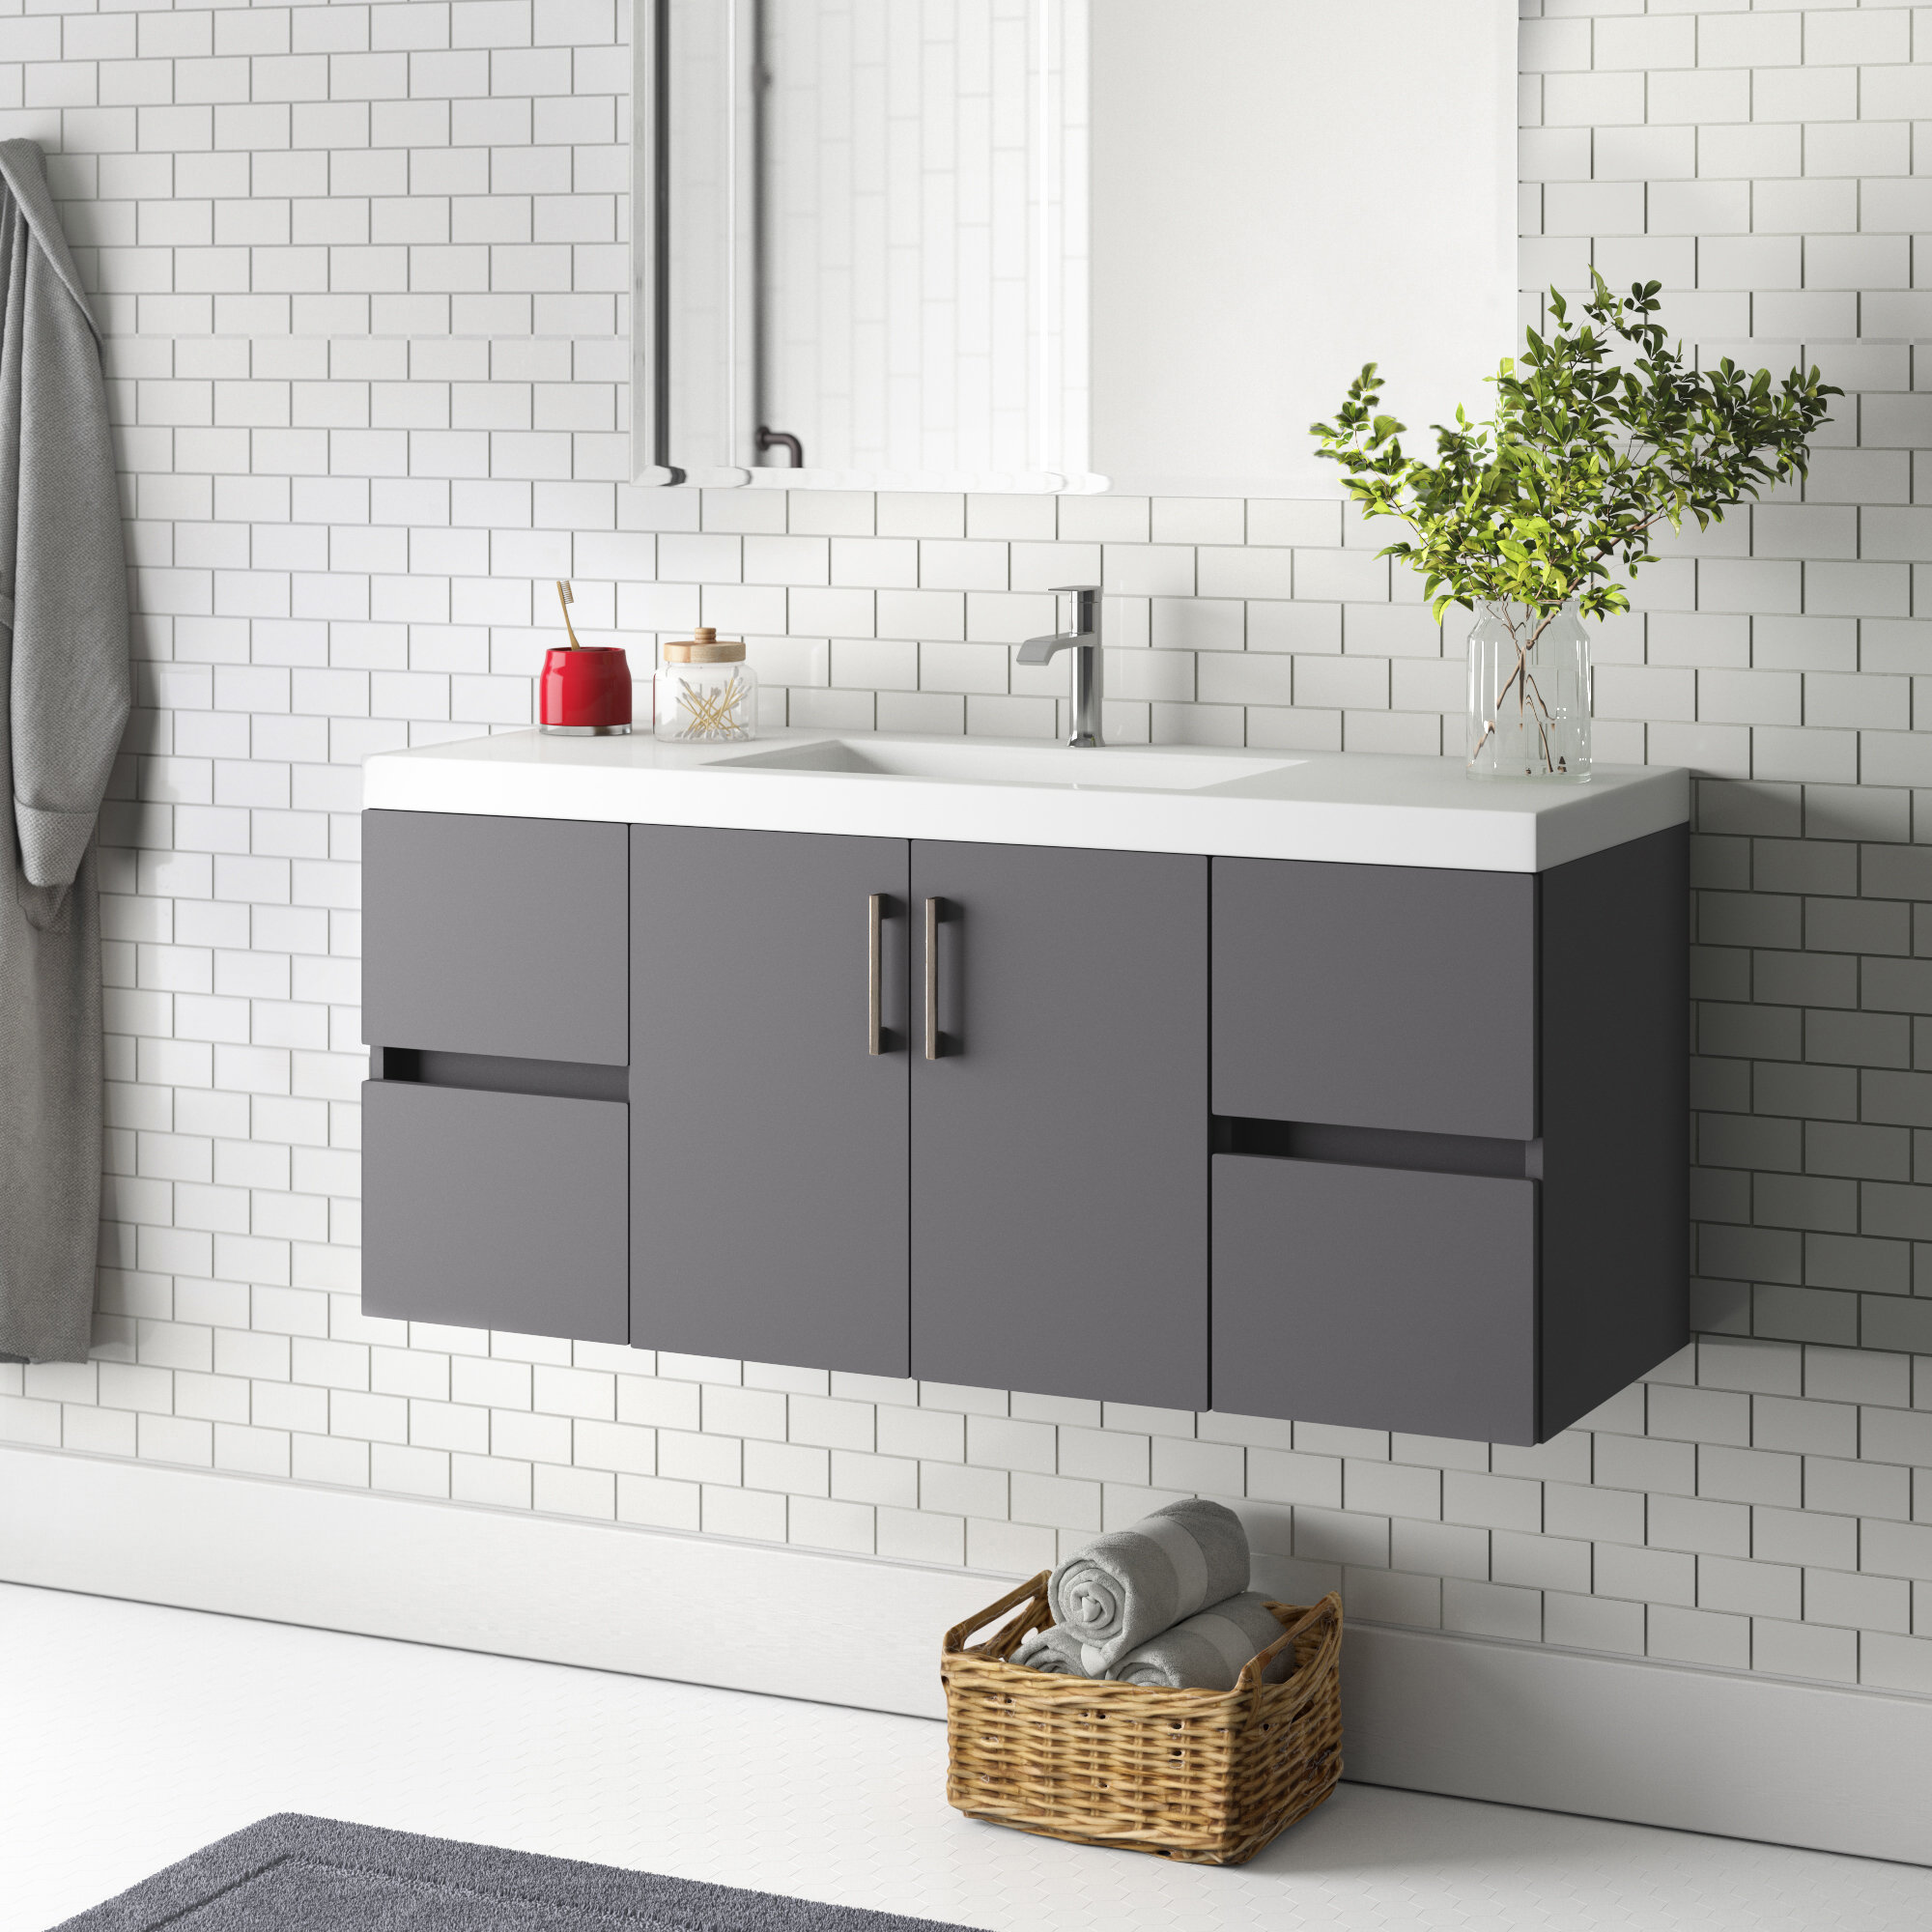 Zipcode Design Albion 49 Wall Mounted Single Bathroom Vanity Set Reviews Wayfair